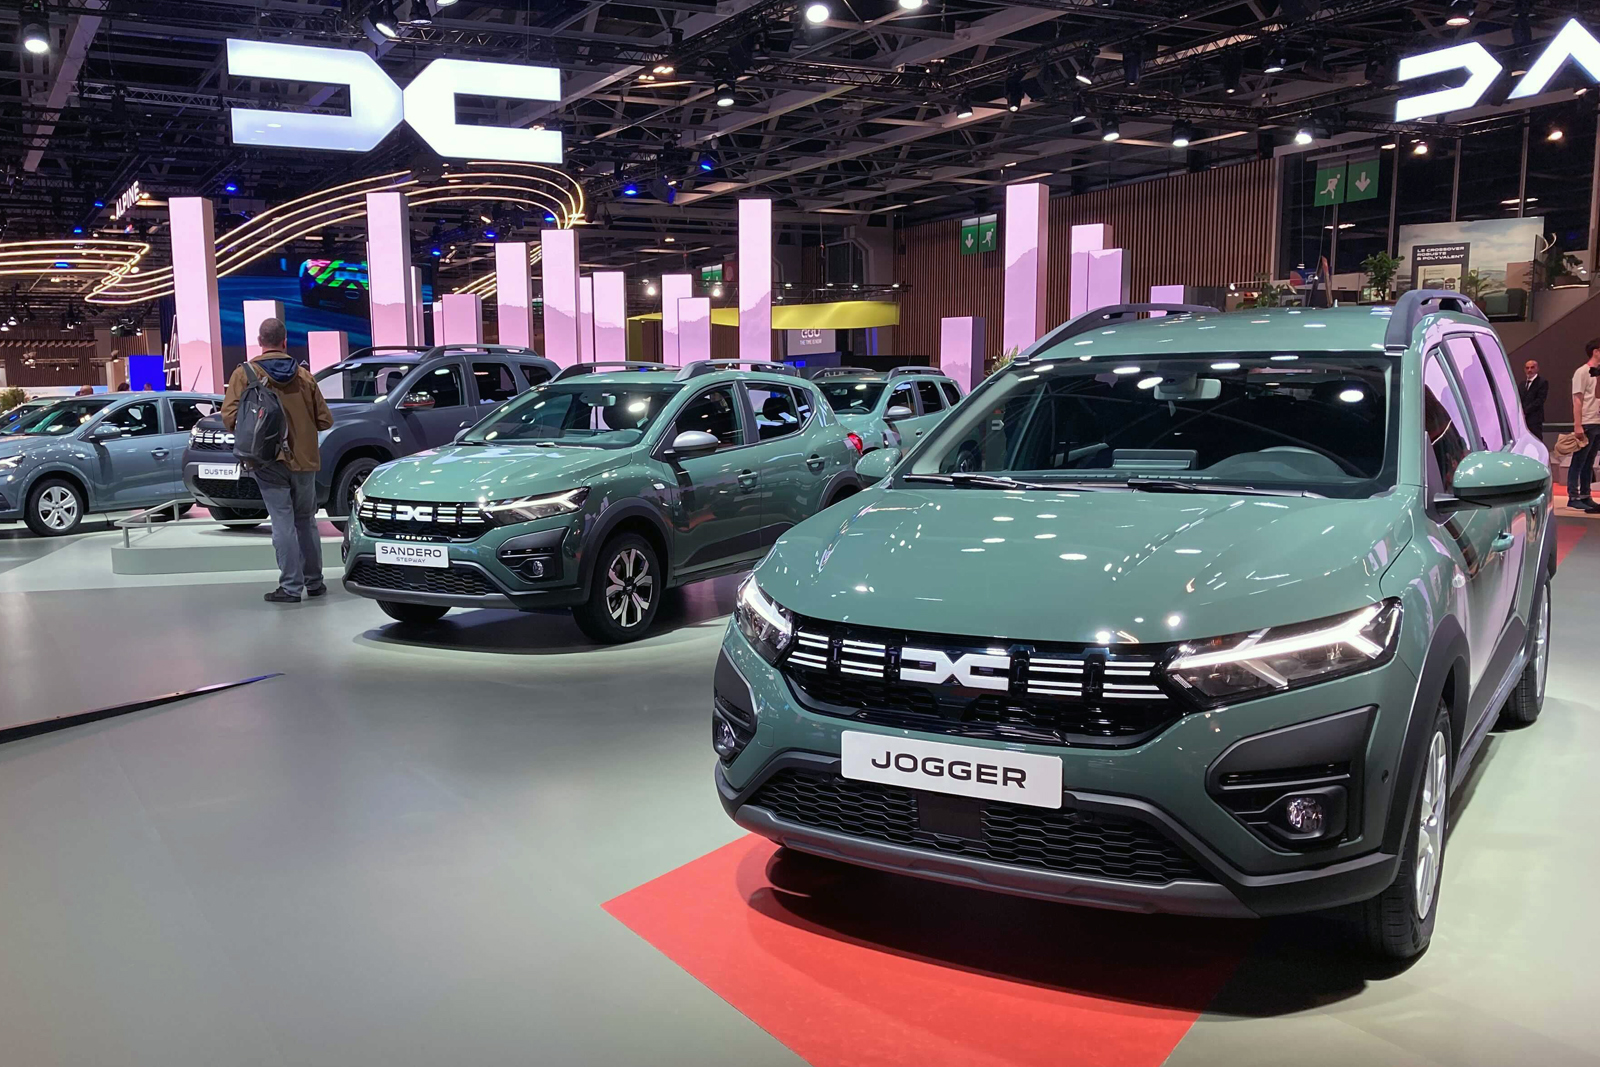 Dacia considering new model line on CMF platform